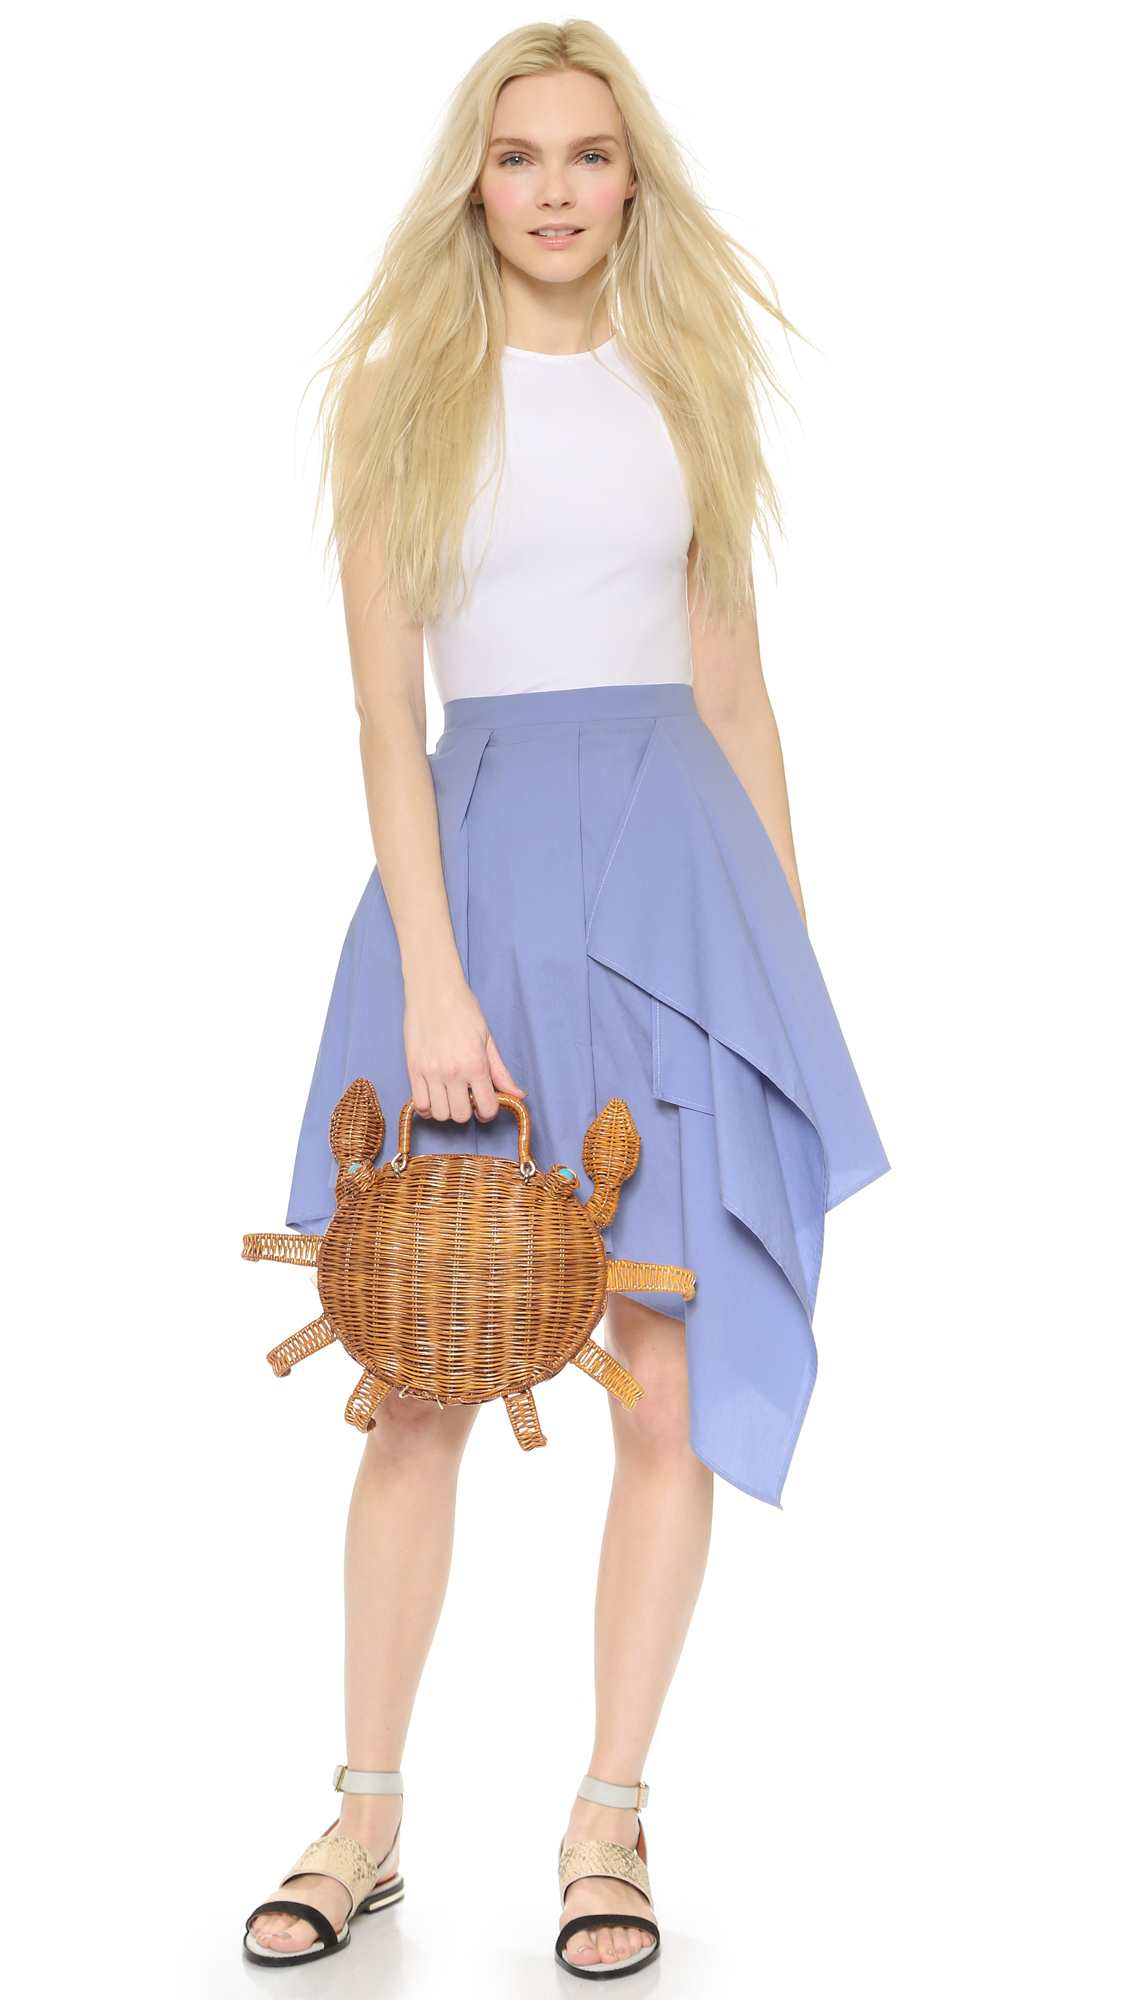 Kate Spade Outlet Shopping new crab collection #katespade